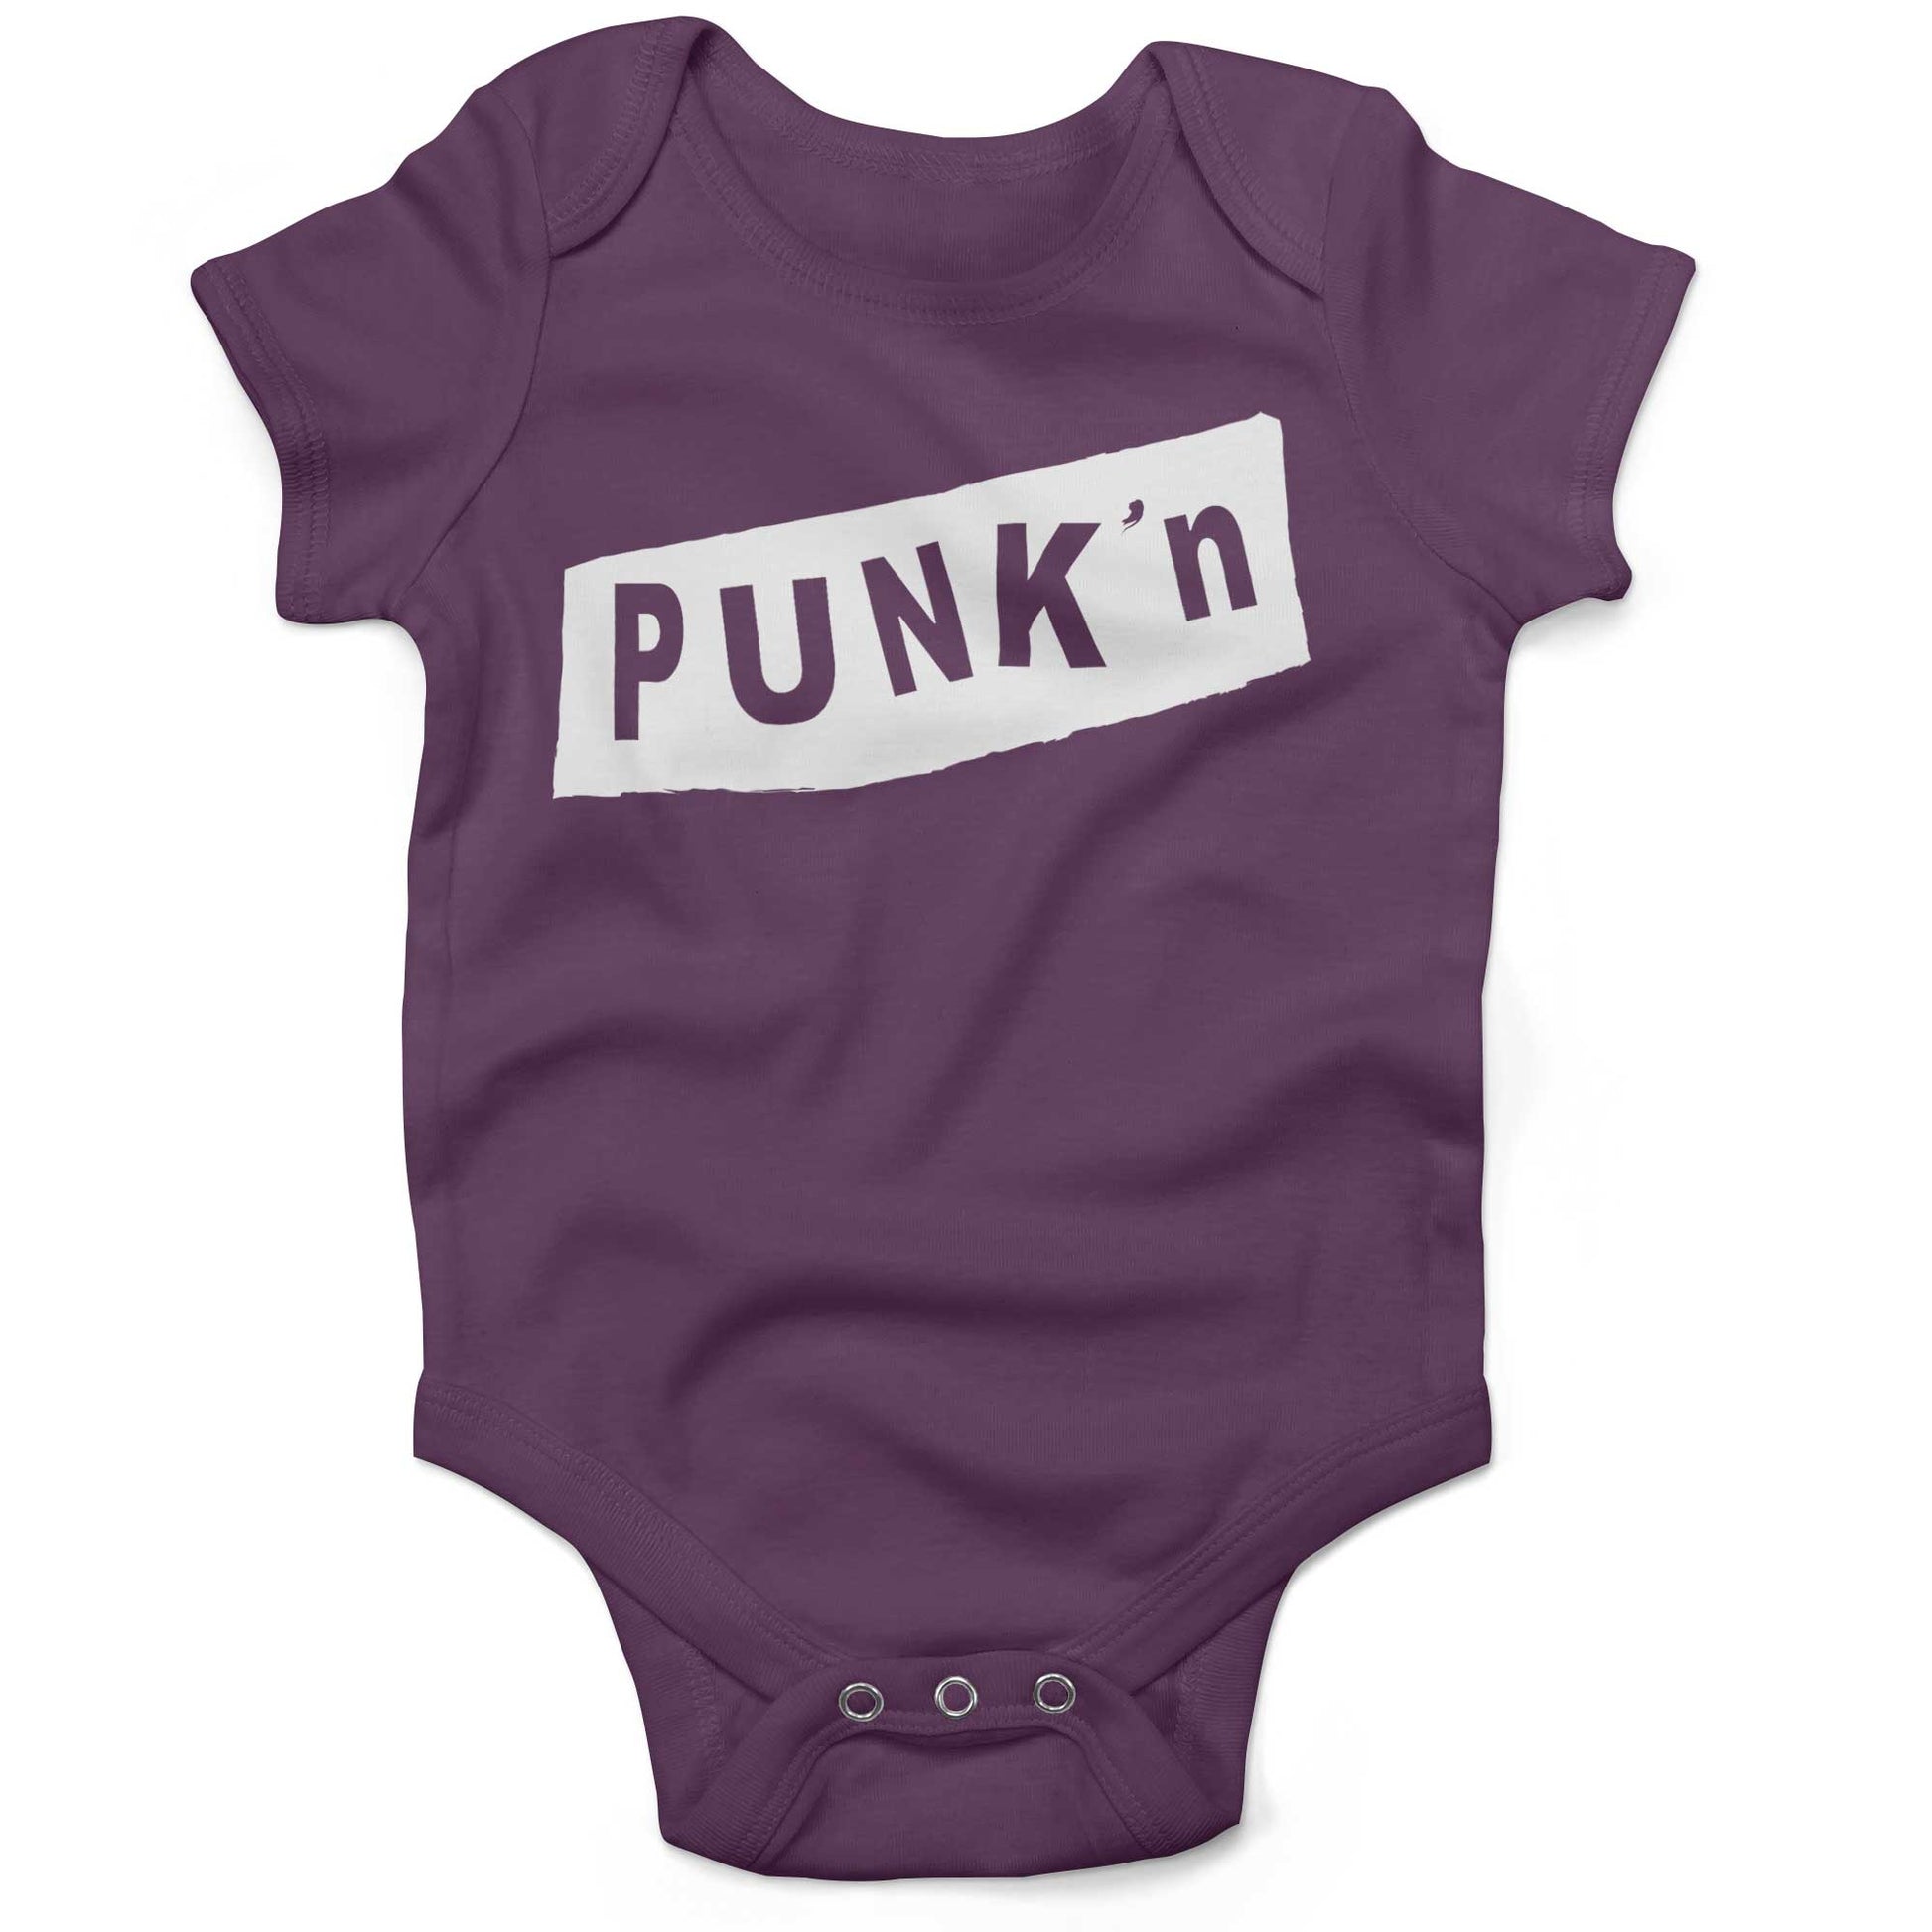 Pumpkin Punk'n Infant Bodysuit or Raglan Tee-Organic Purple-3-6 months